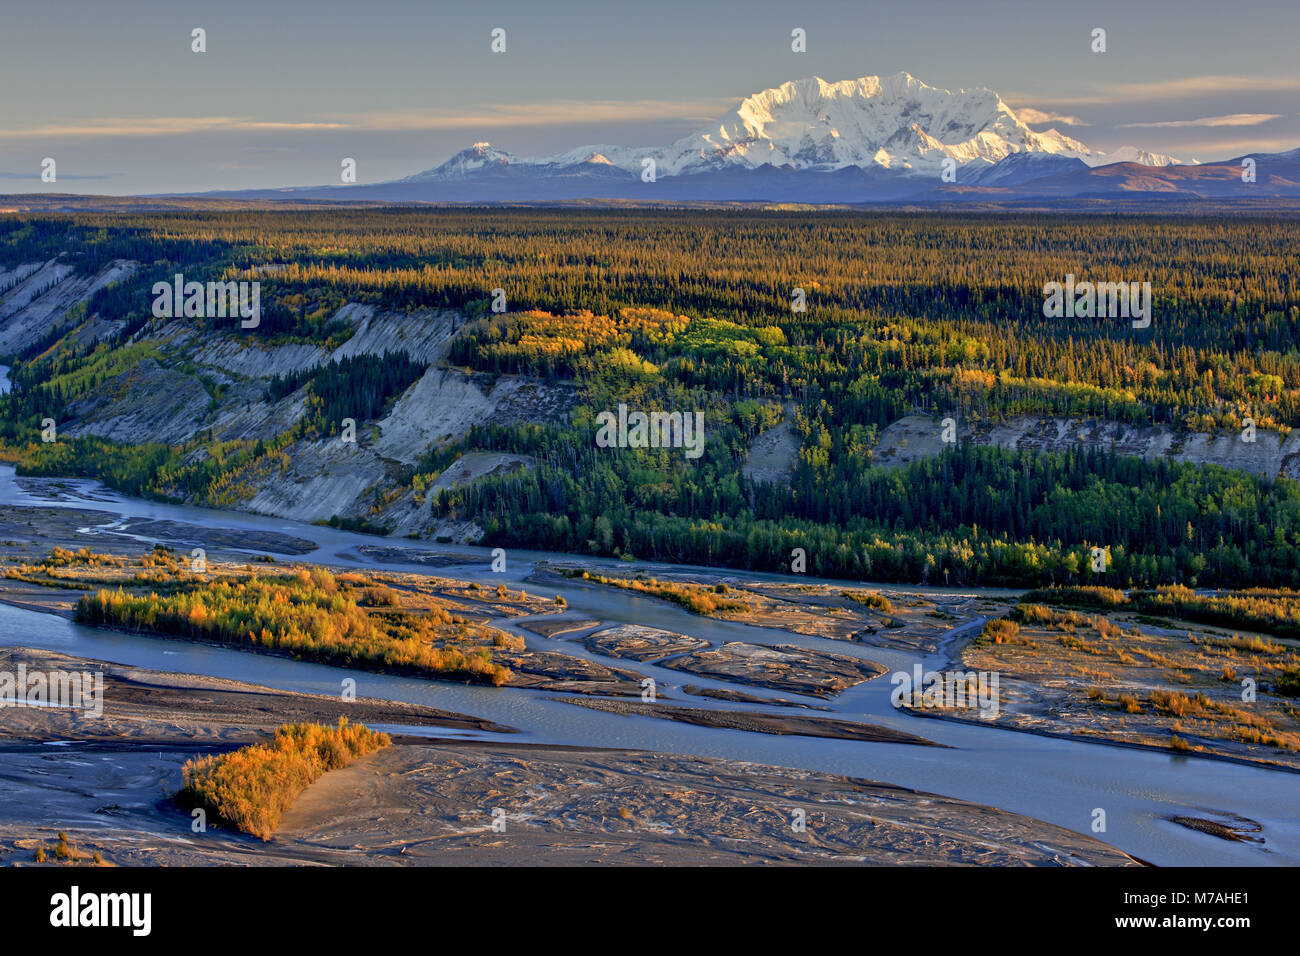 North America, the USA, Alaska, the central south, Wrangell Mountains, Wrangell Saint Elias National Park and Preserve, Mount Drum (3661 metres), Chitana River, Stock Photo